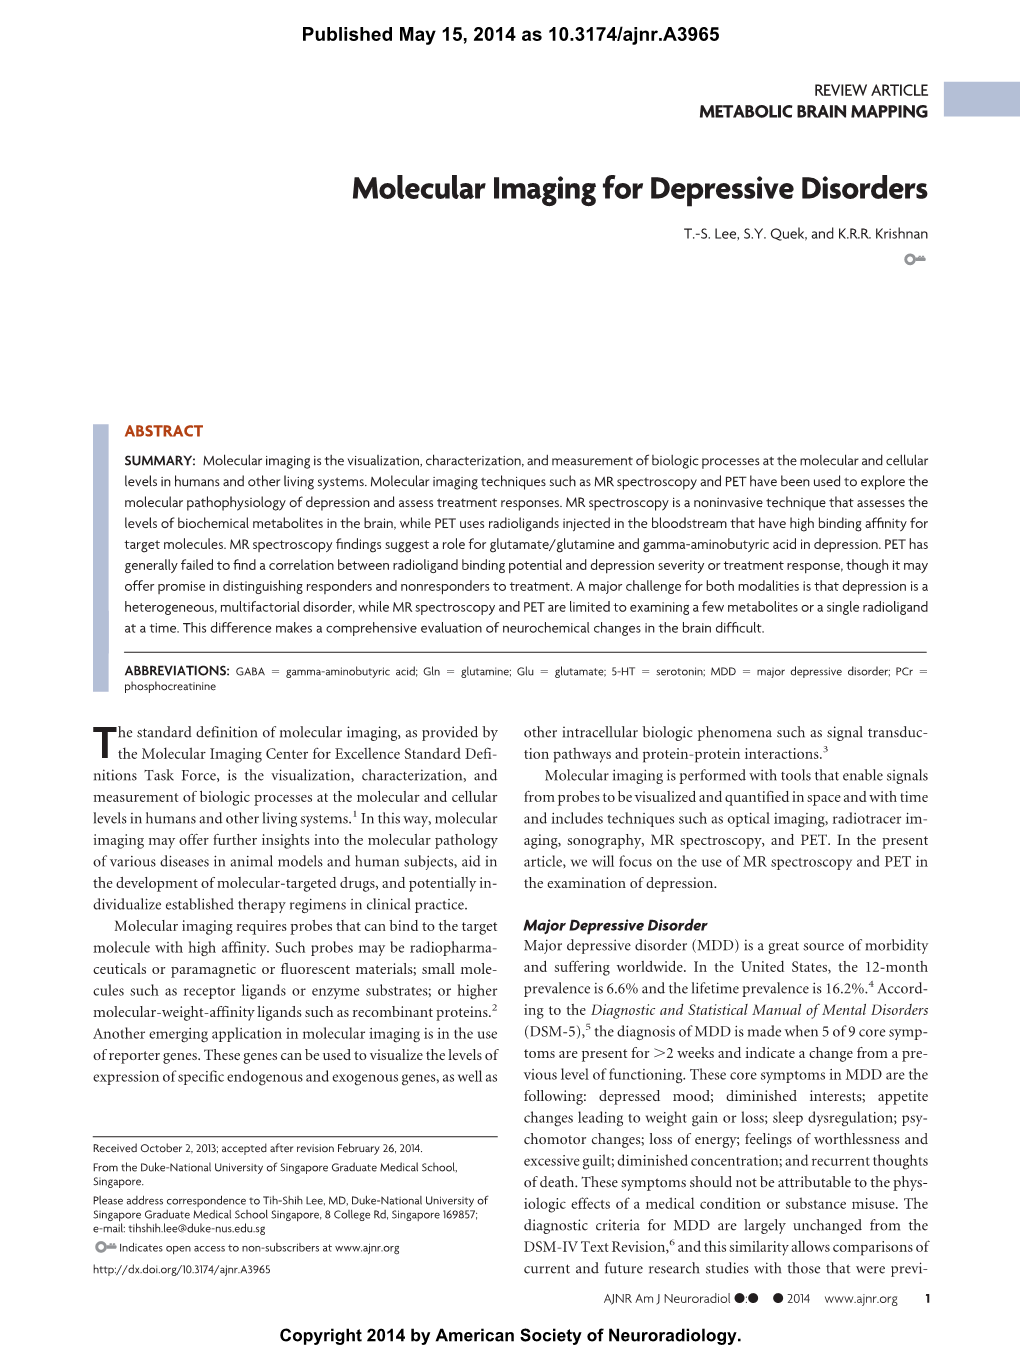 Molecular Imaging for Depressive Disorders